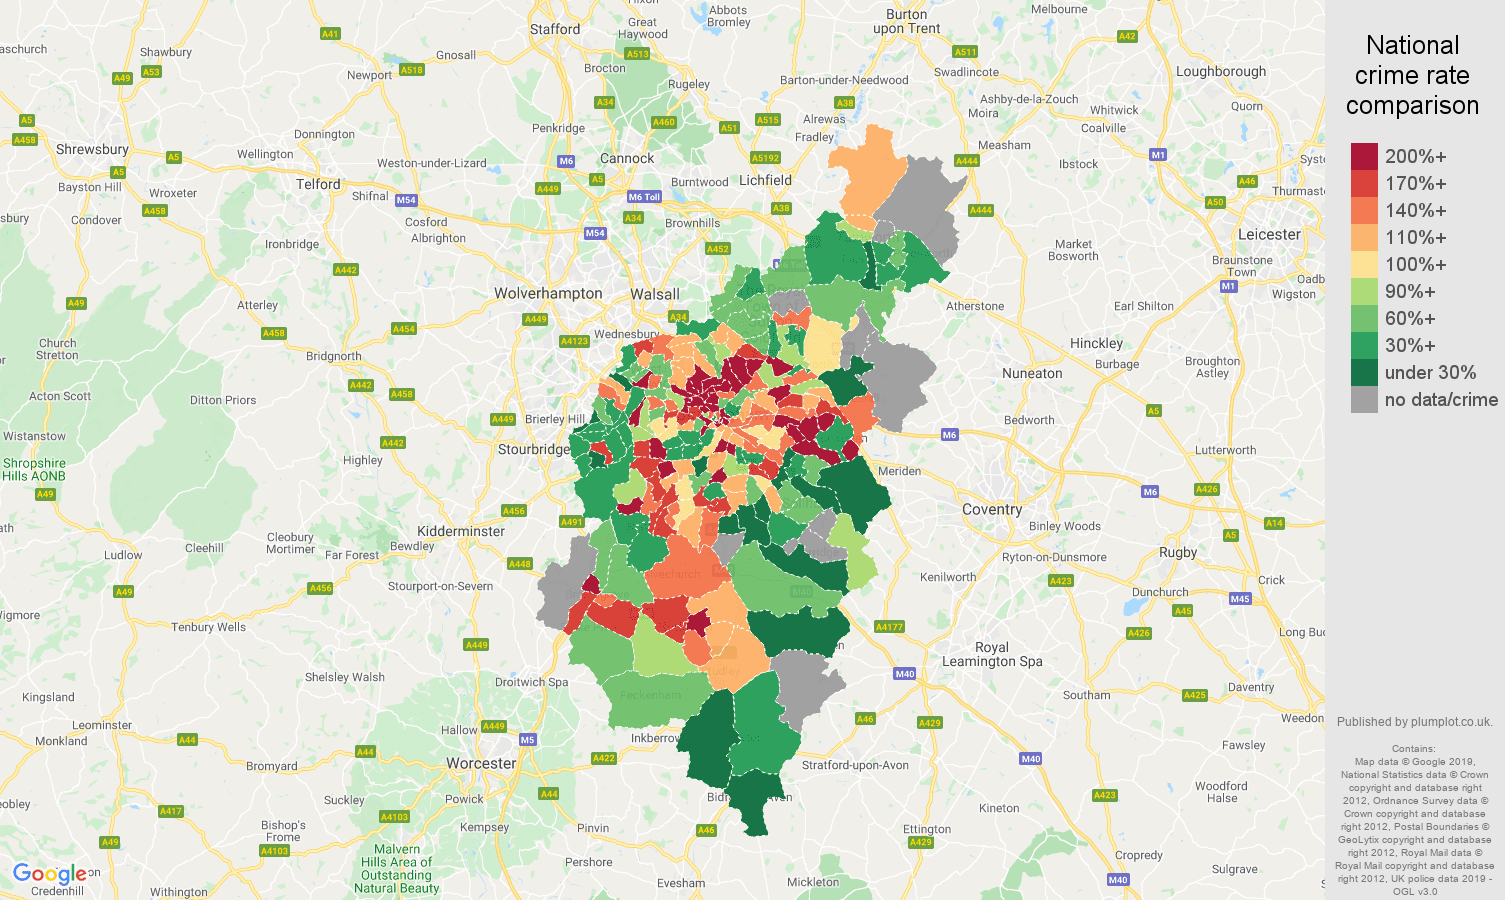 Birmingham possession of weapons crime rate comparison map